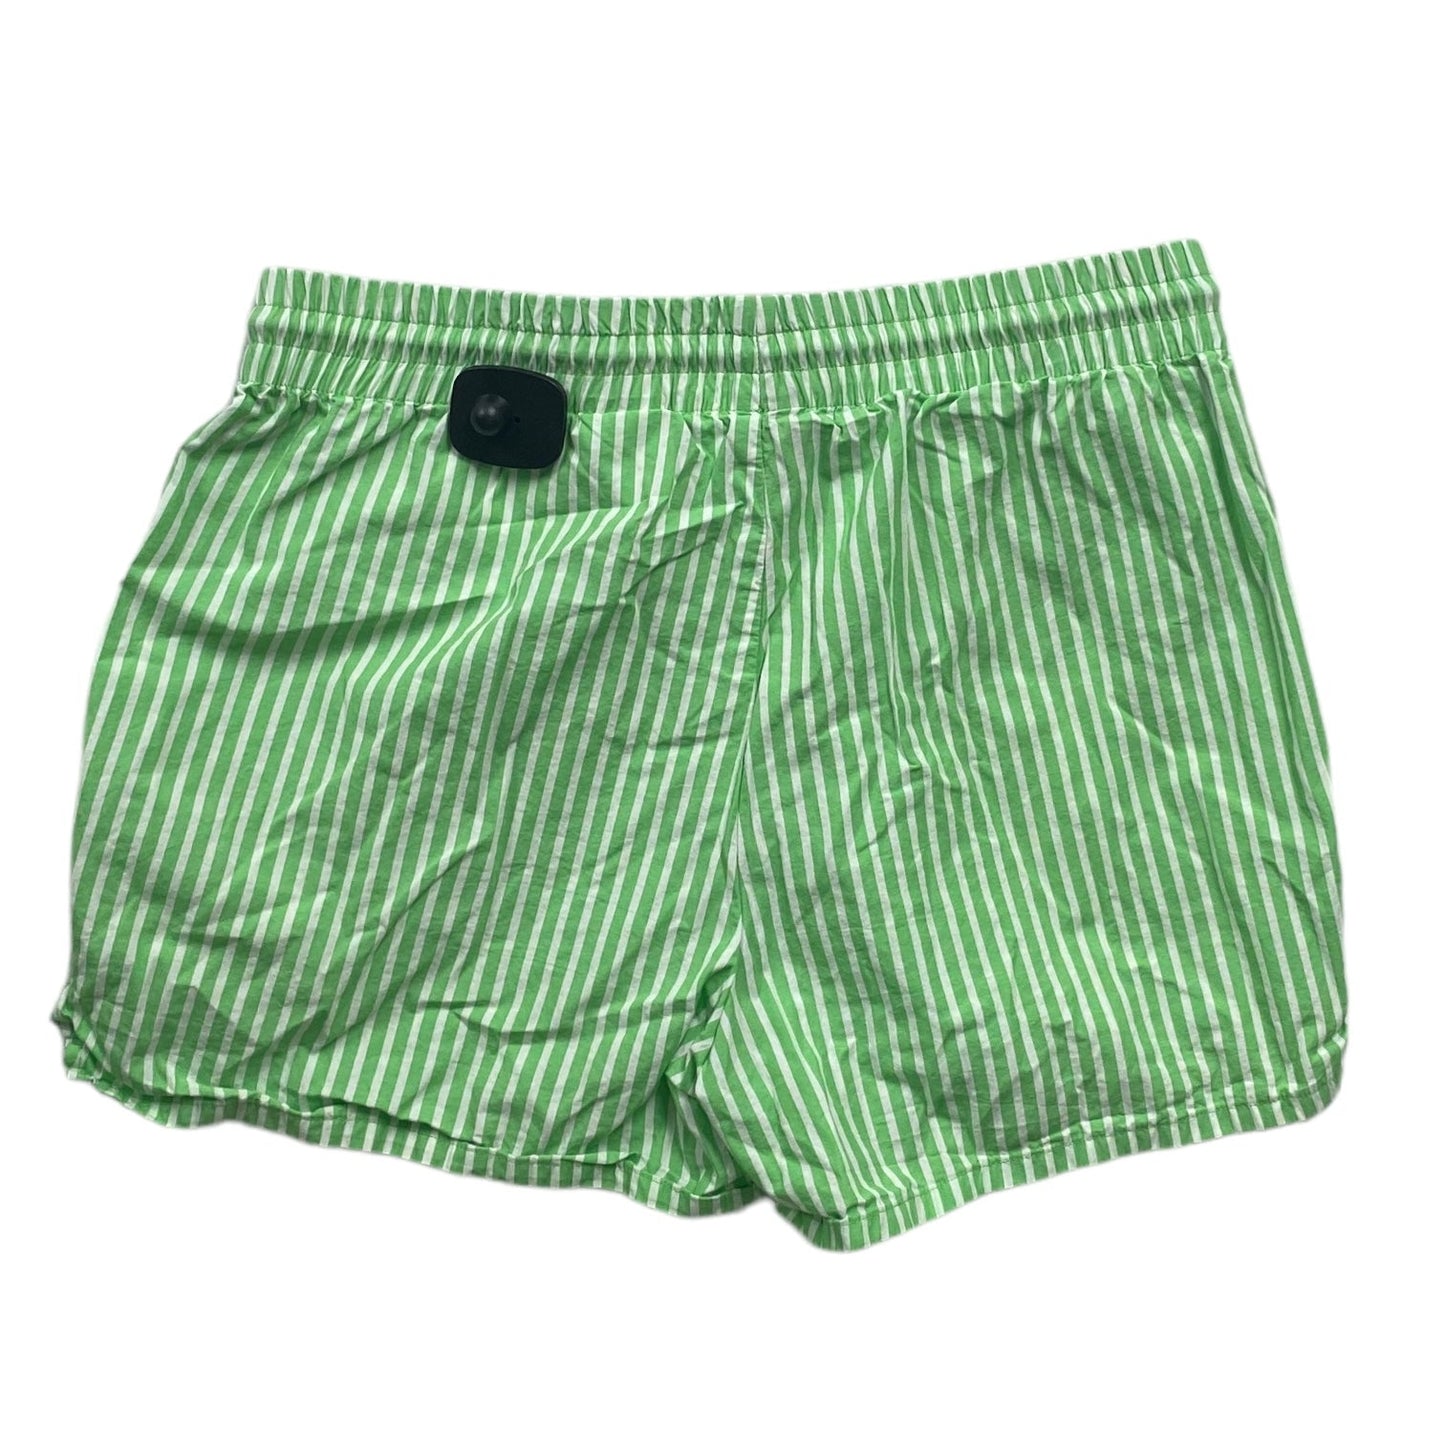 Green & White Shorts H&m, Size M